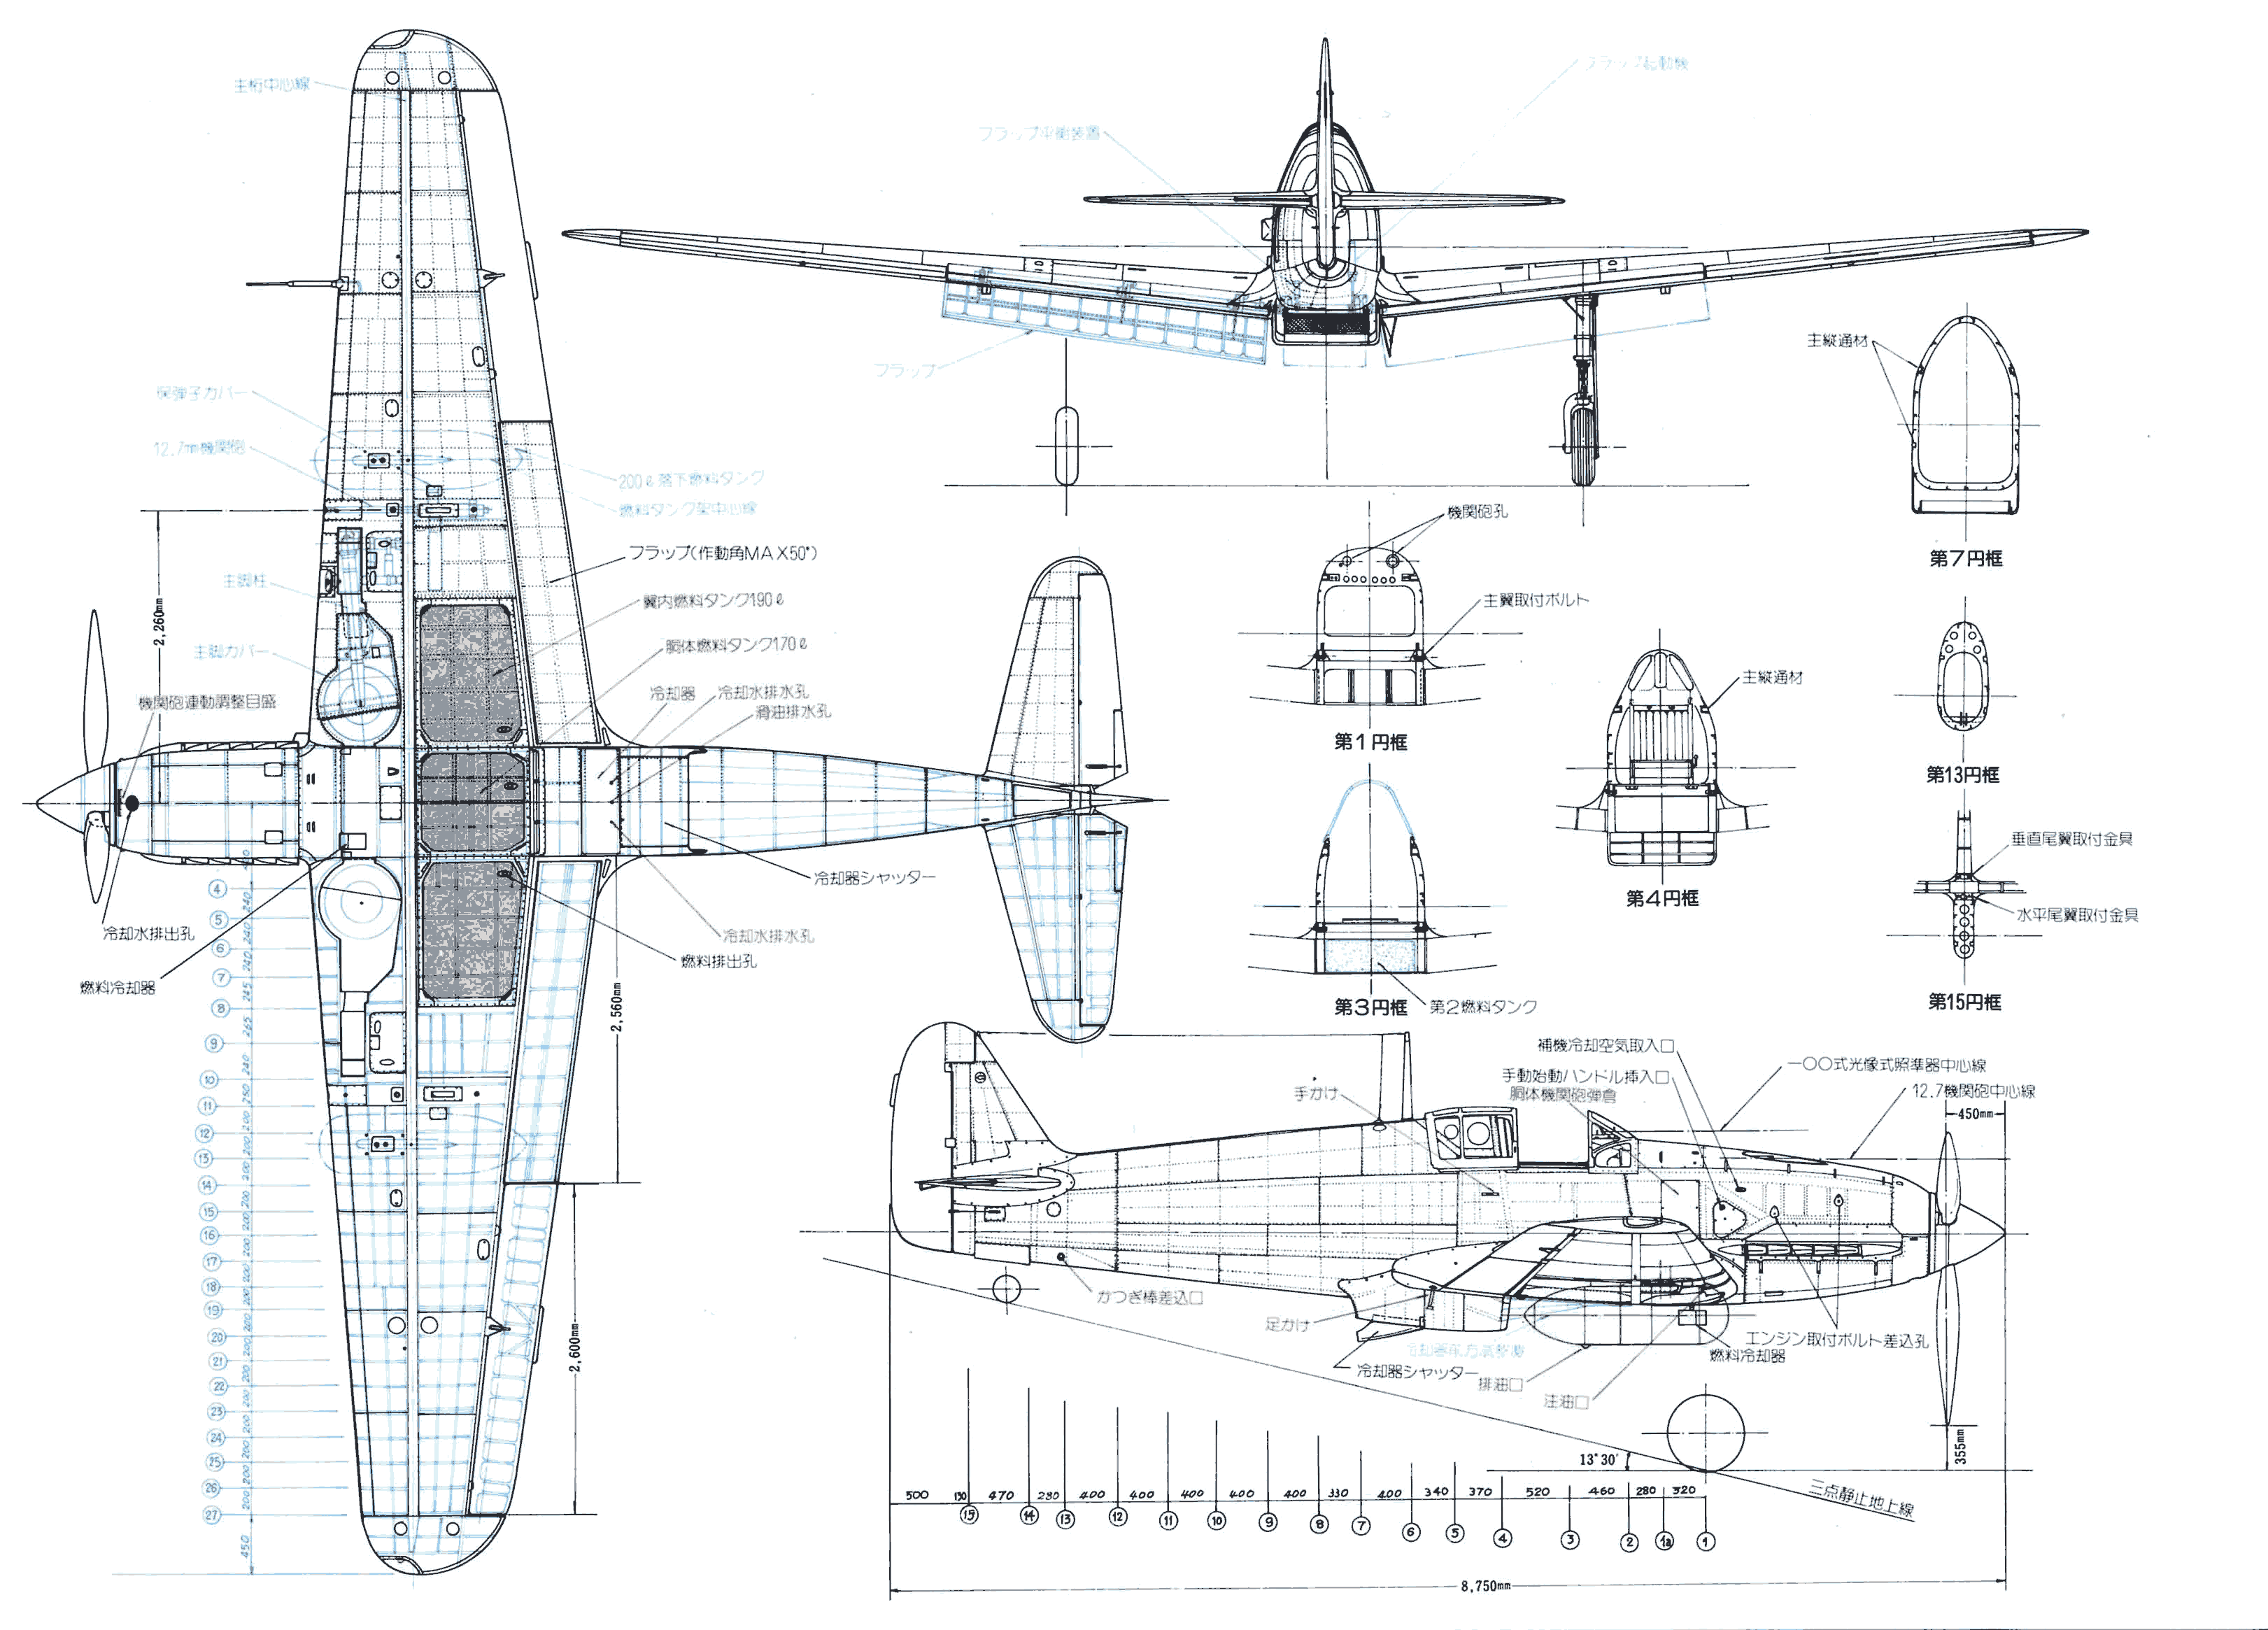 Kawasaki Ki-61 blueprint